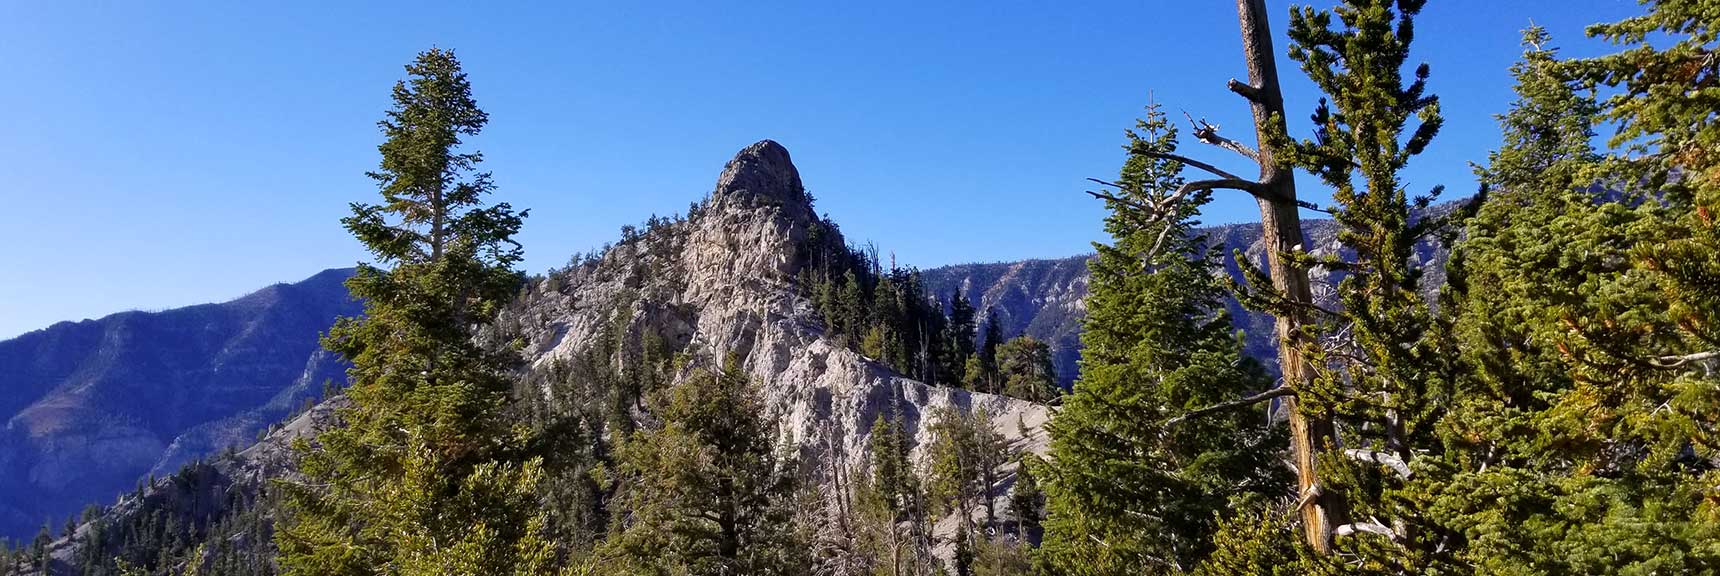 Cockscomb Ridge/Peak | Mt Charleston Wilderness | Spring Mountains, Nevada